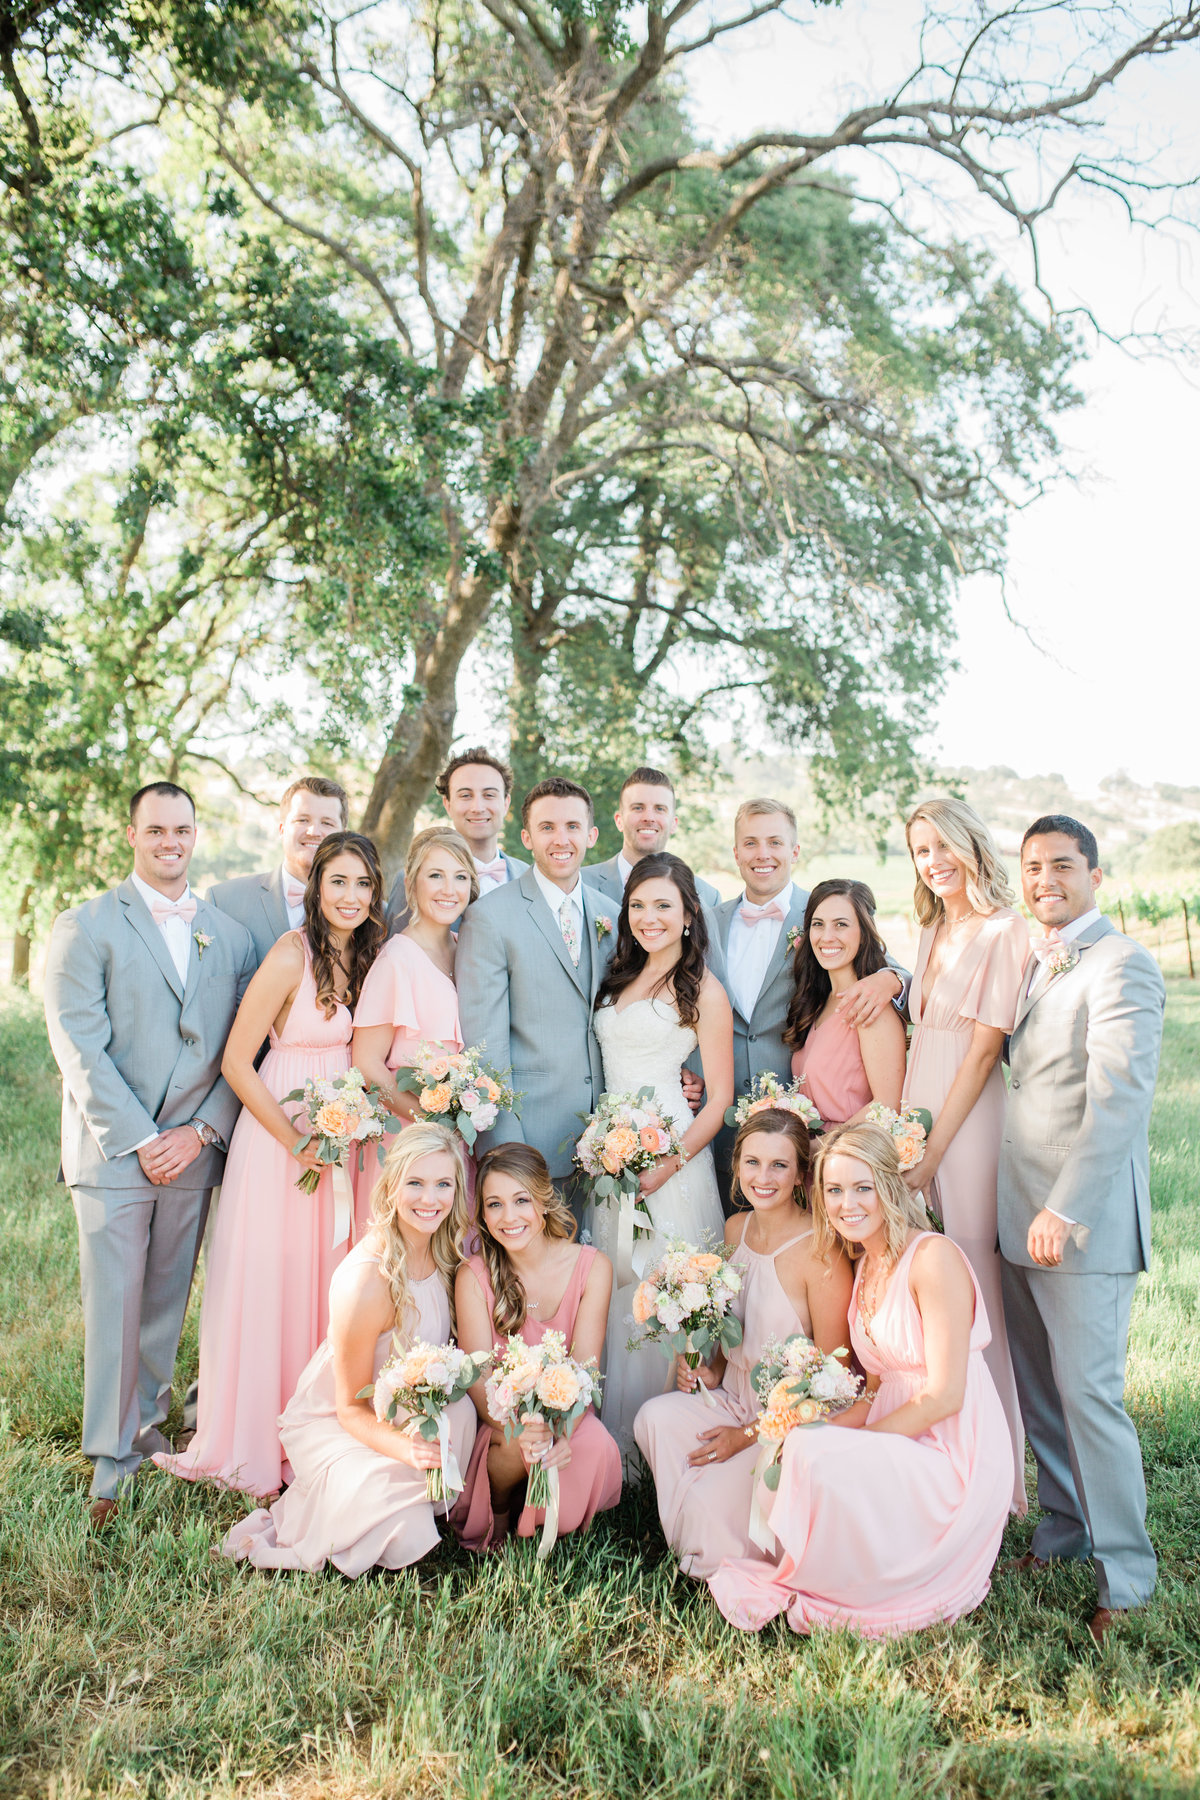 Carissa and Tyler Sneak Peek | California Wedding Photographer | Katie Schoepflin Photography 2018.13